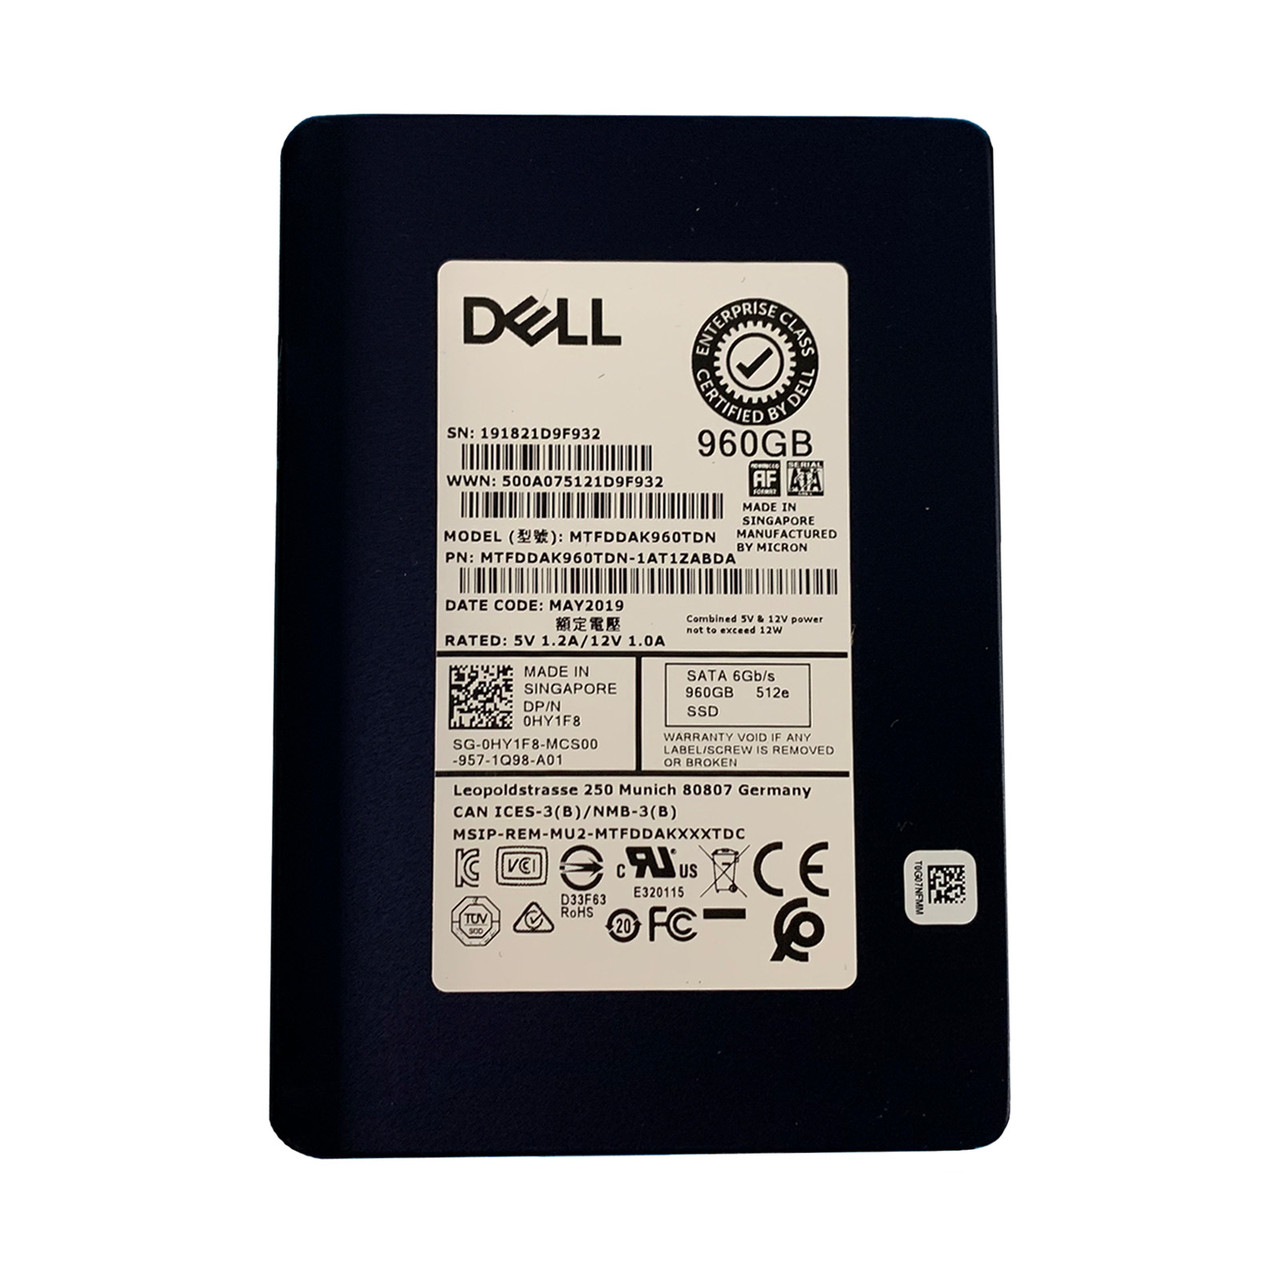 Dell HY1F8 960GB SATA 512e 6GBPS 2.5" SSD MTFDDAK960TDN-1AT1ZABDA